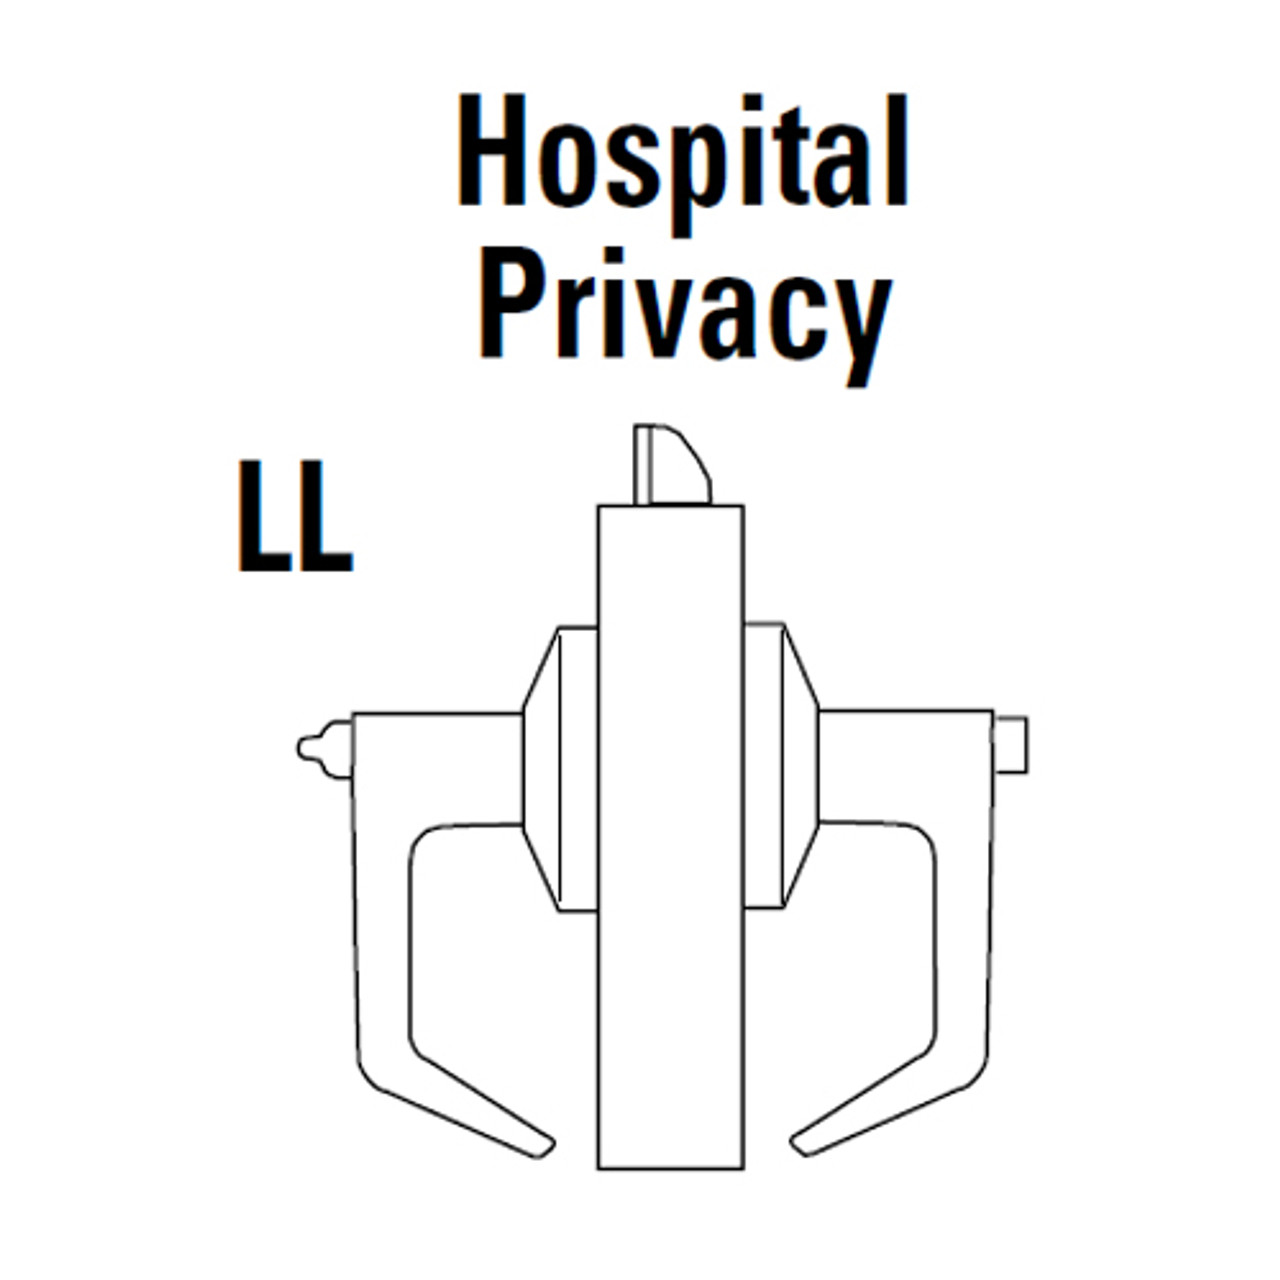 9K30LL14LSTK618 Best 9K Series Hospital Privacy Heavy Duty Cylindrical Lever Locks in Bright Nickel